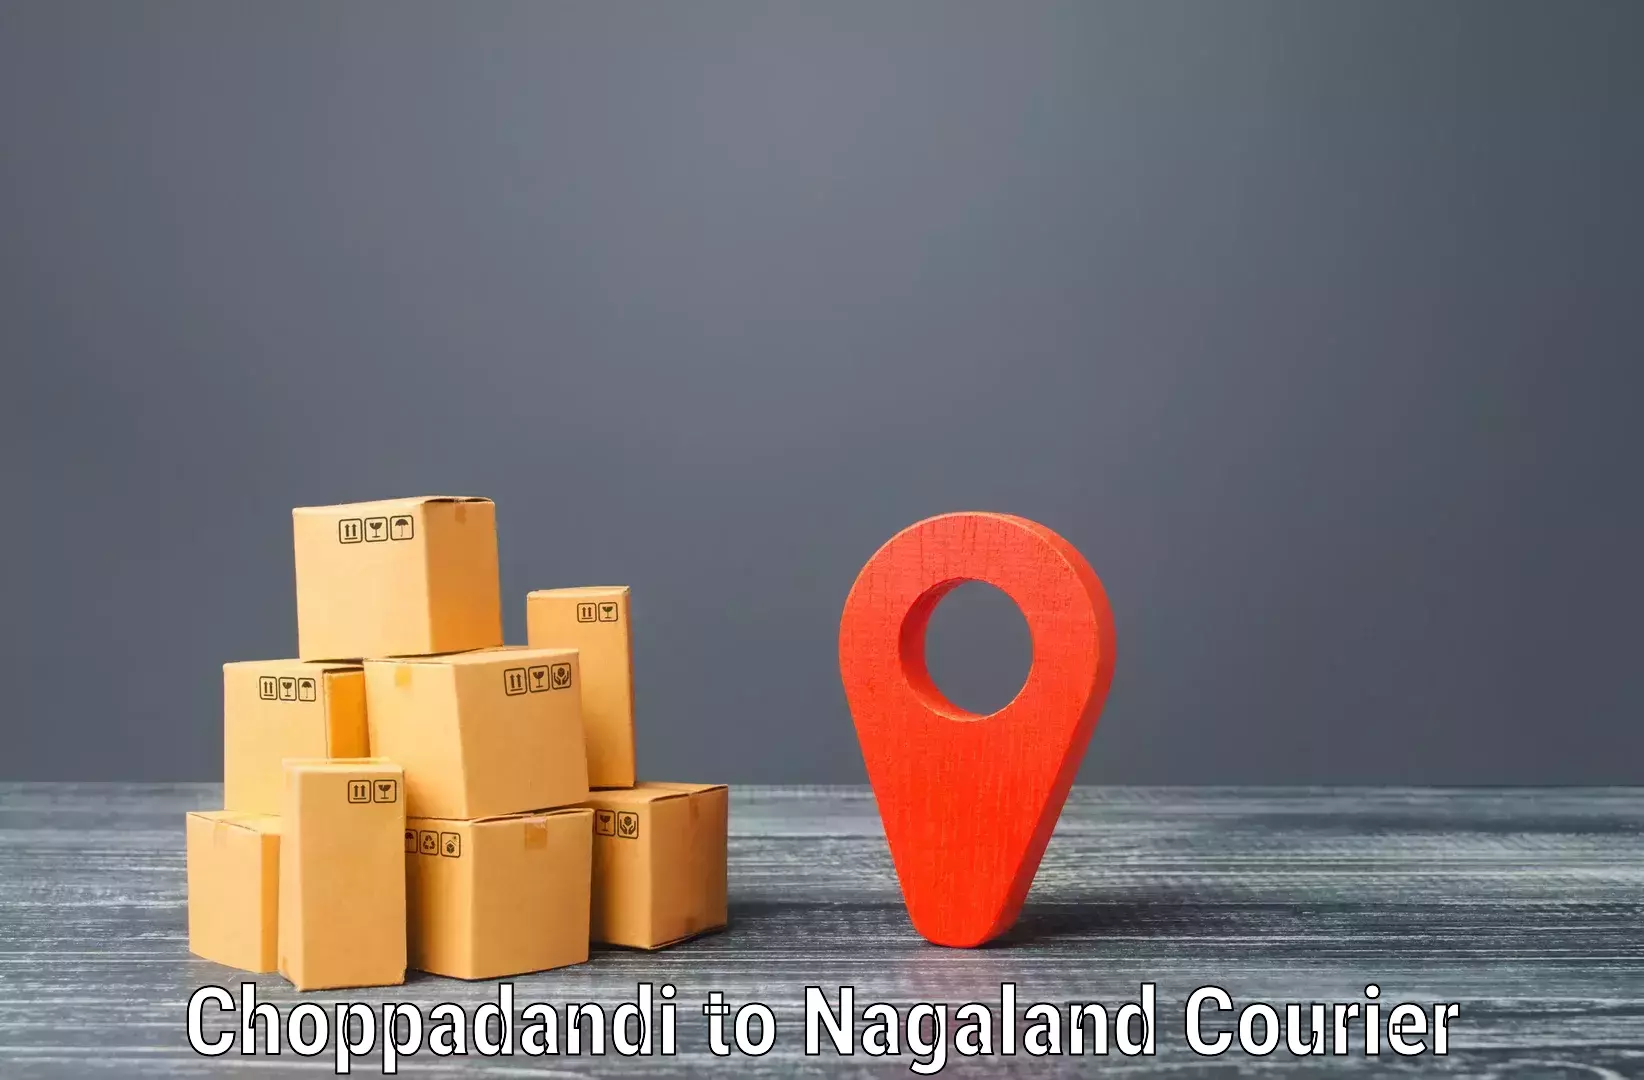 On-demand shipping options Choppadandi to Dimapur